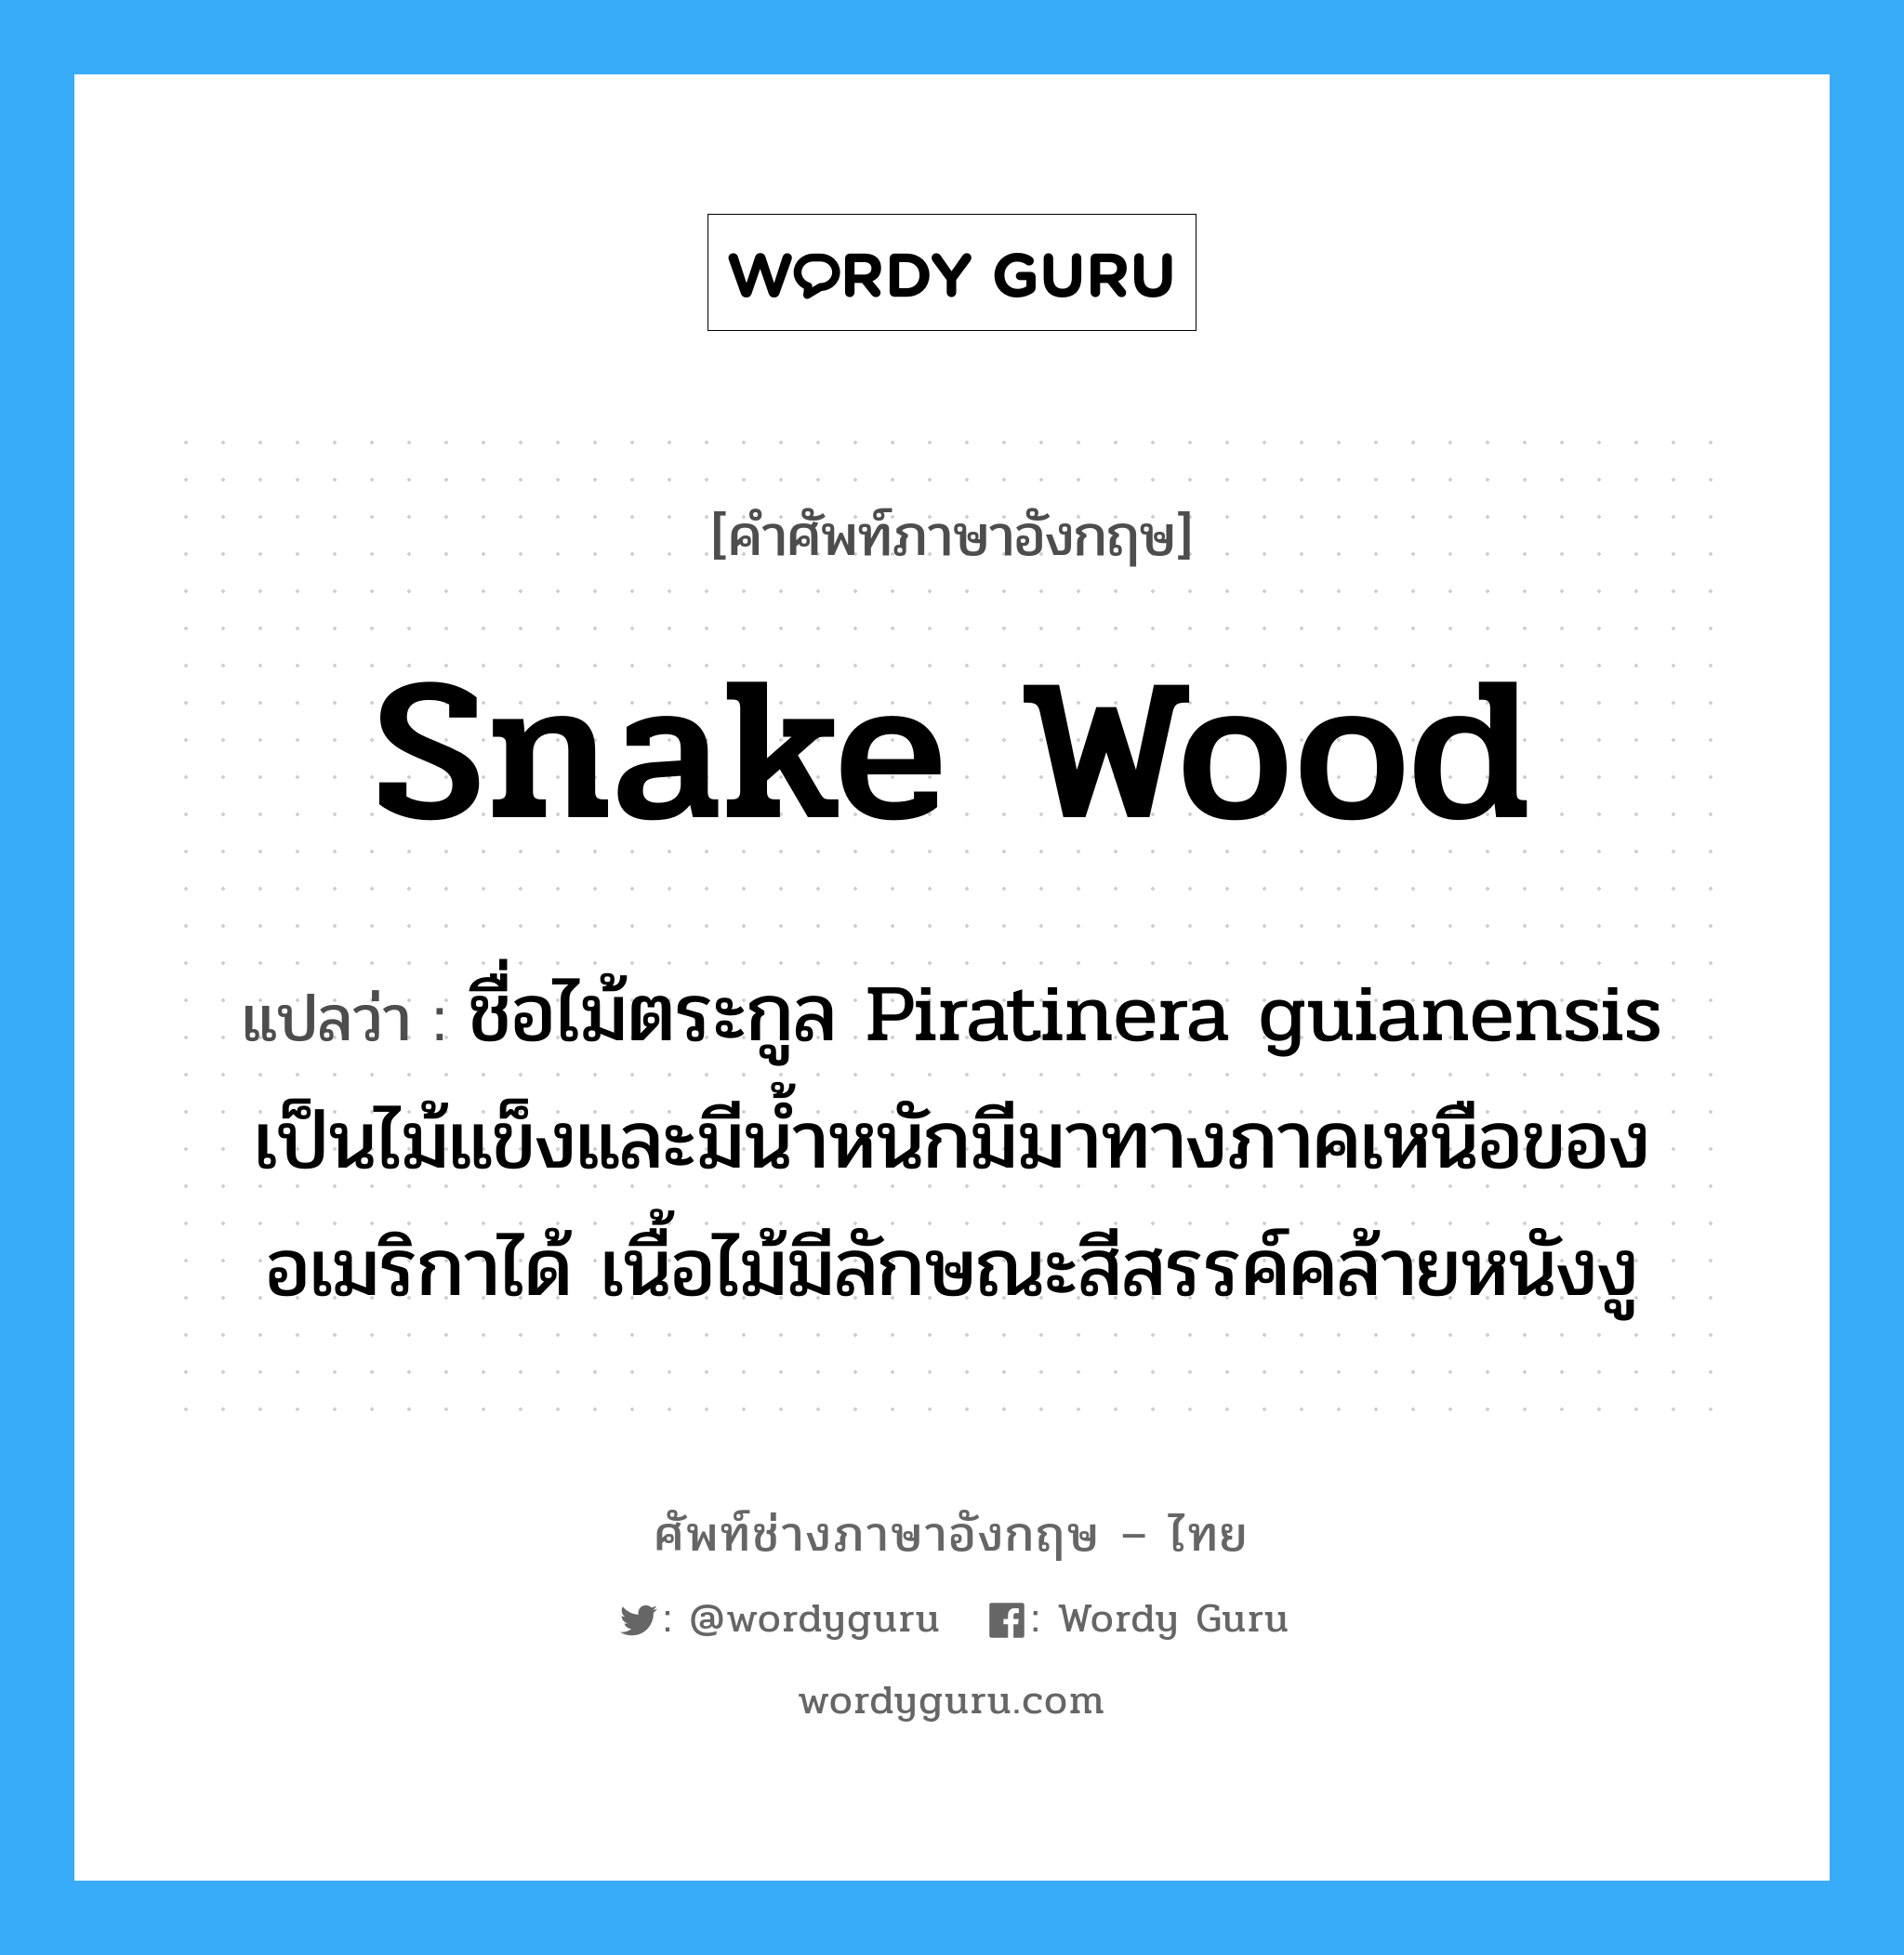 snake wood แปลว่า?, คำศัพท์ช่างภาษาอังกฤษ - ไทย snake wood คำศัพท์ภาษาอังกฤษ snake wood แปลว่า ชื่อไม้ตระกูล Piratinera guianensis เป็นไม้แข็งและมีน้ำหนักมีมาทางภาคเหนือของอเมริกาได้ เนื้อไม้มีลักษณะสีสรรค์คล้ายหนังงู